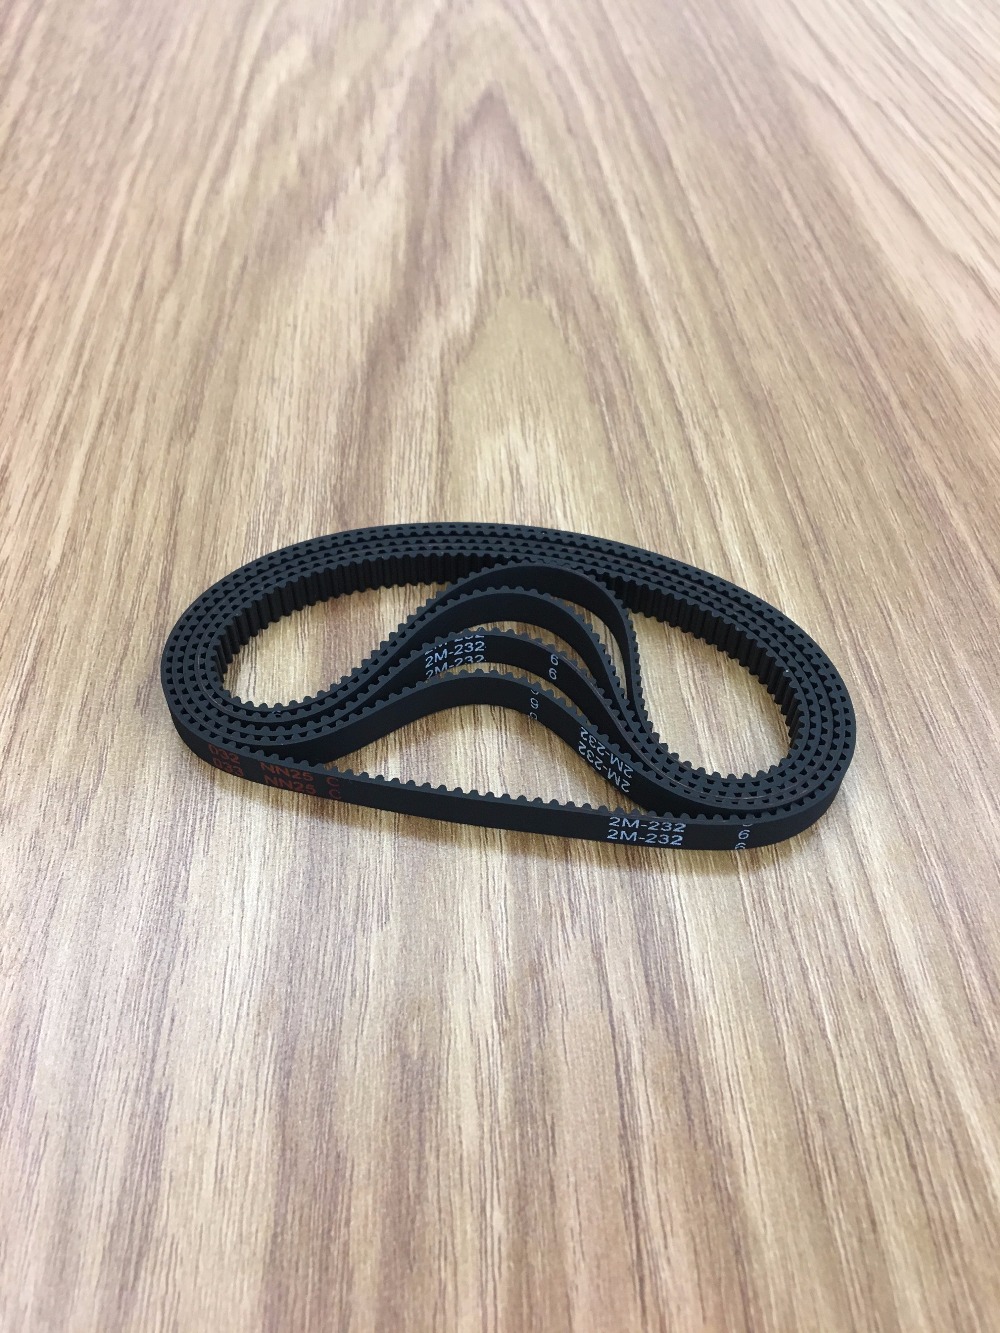 10PCS 2gt232 band closed-loop rubber 2gt -232-6timing belt Teeth116Length 232mm wide 6mm 3 d printer belt wheel